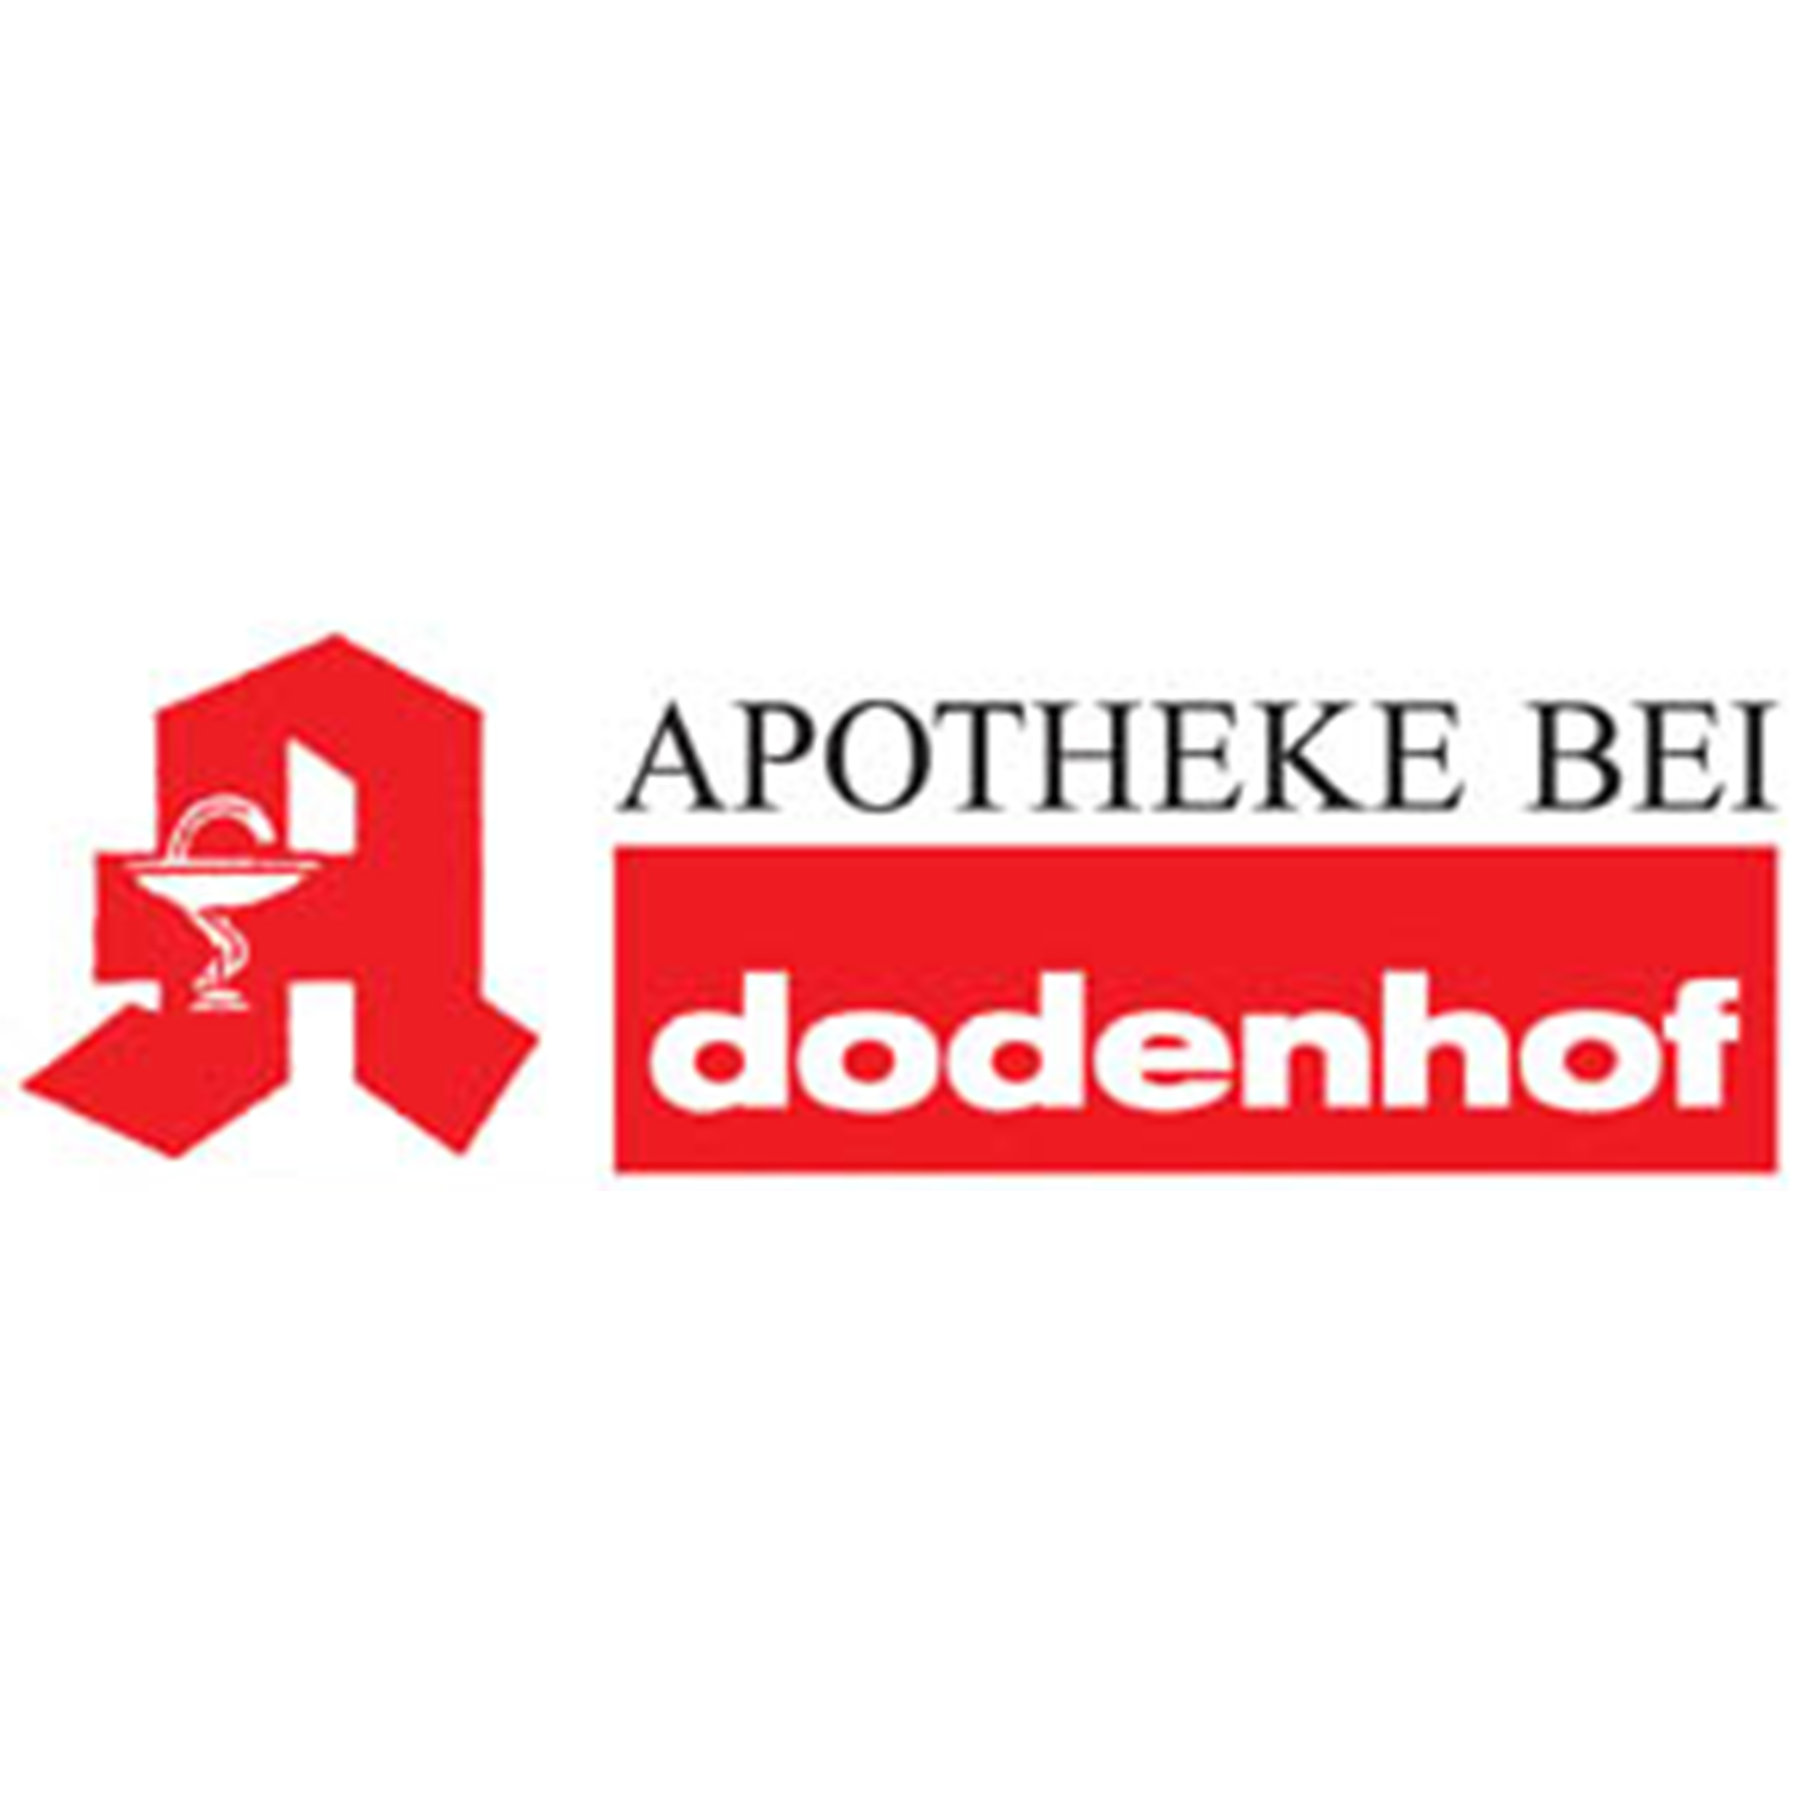 Apotheke bei Dodenhof Logo